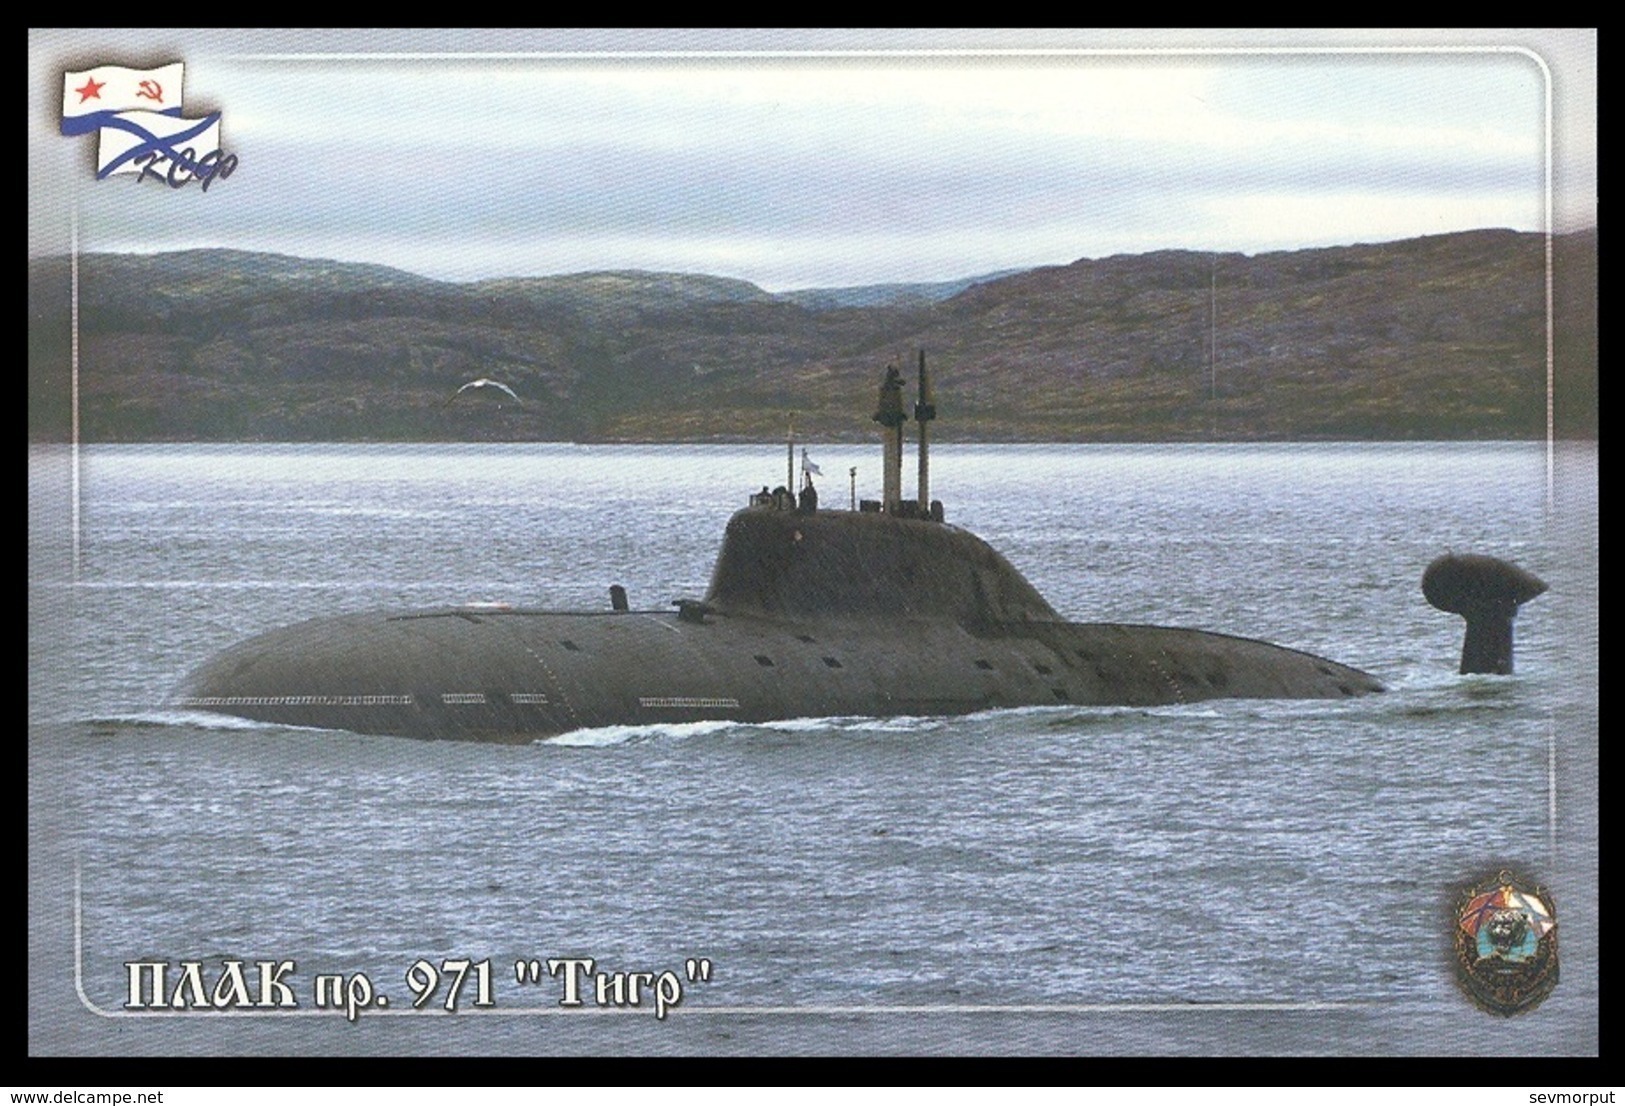 RUSSIA POSTCARD 3665 Mint SUBMARINE 971 "TIGR" TIGER NAVY NAVAL NUCLEAR ATOM SOUS MARIN U BOOT ARCTIC POLAR NORD 22 - Submarines